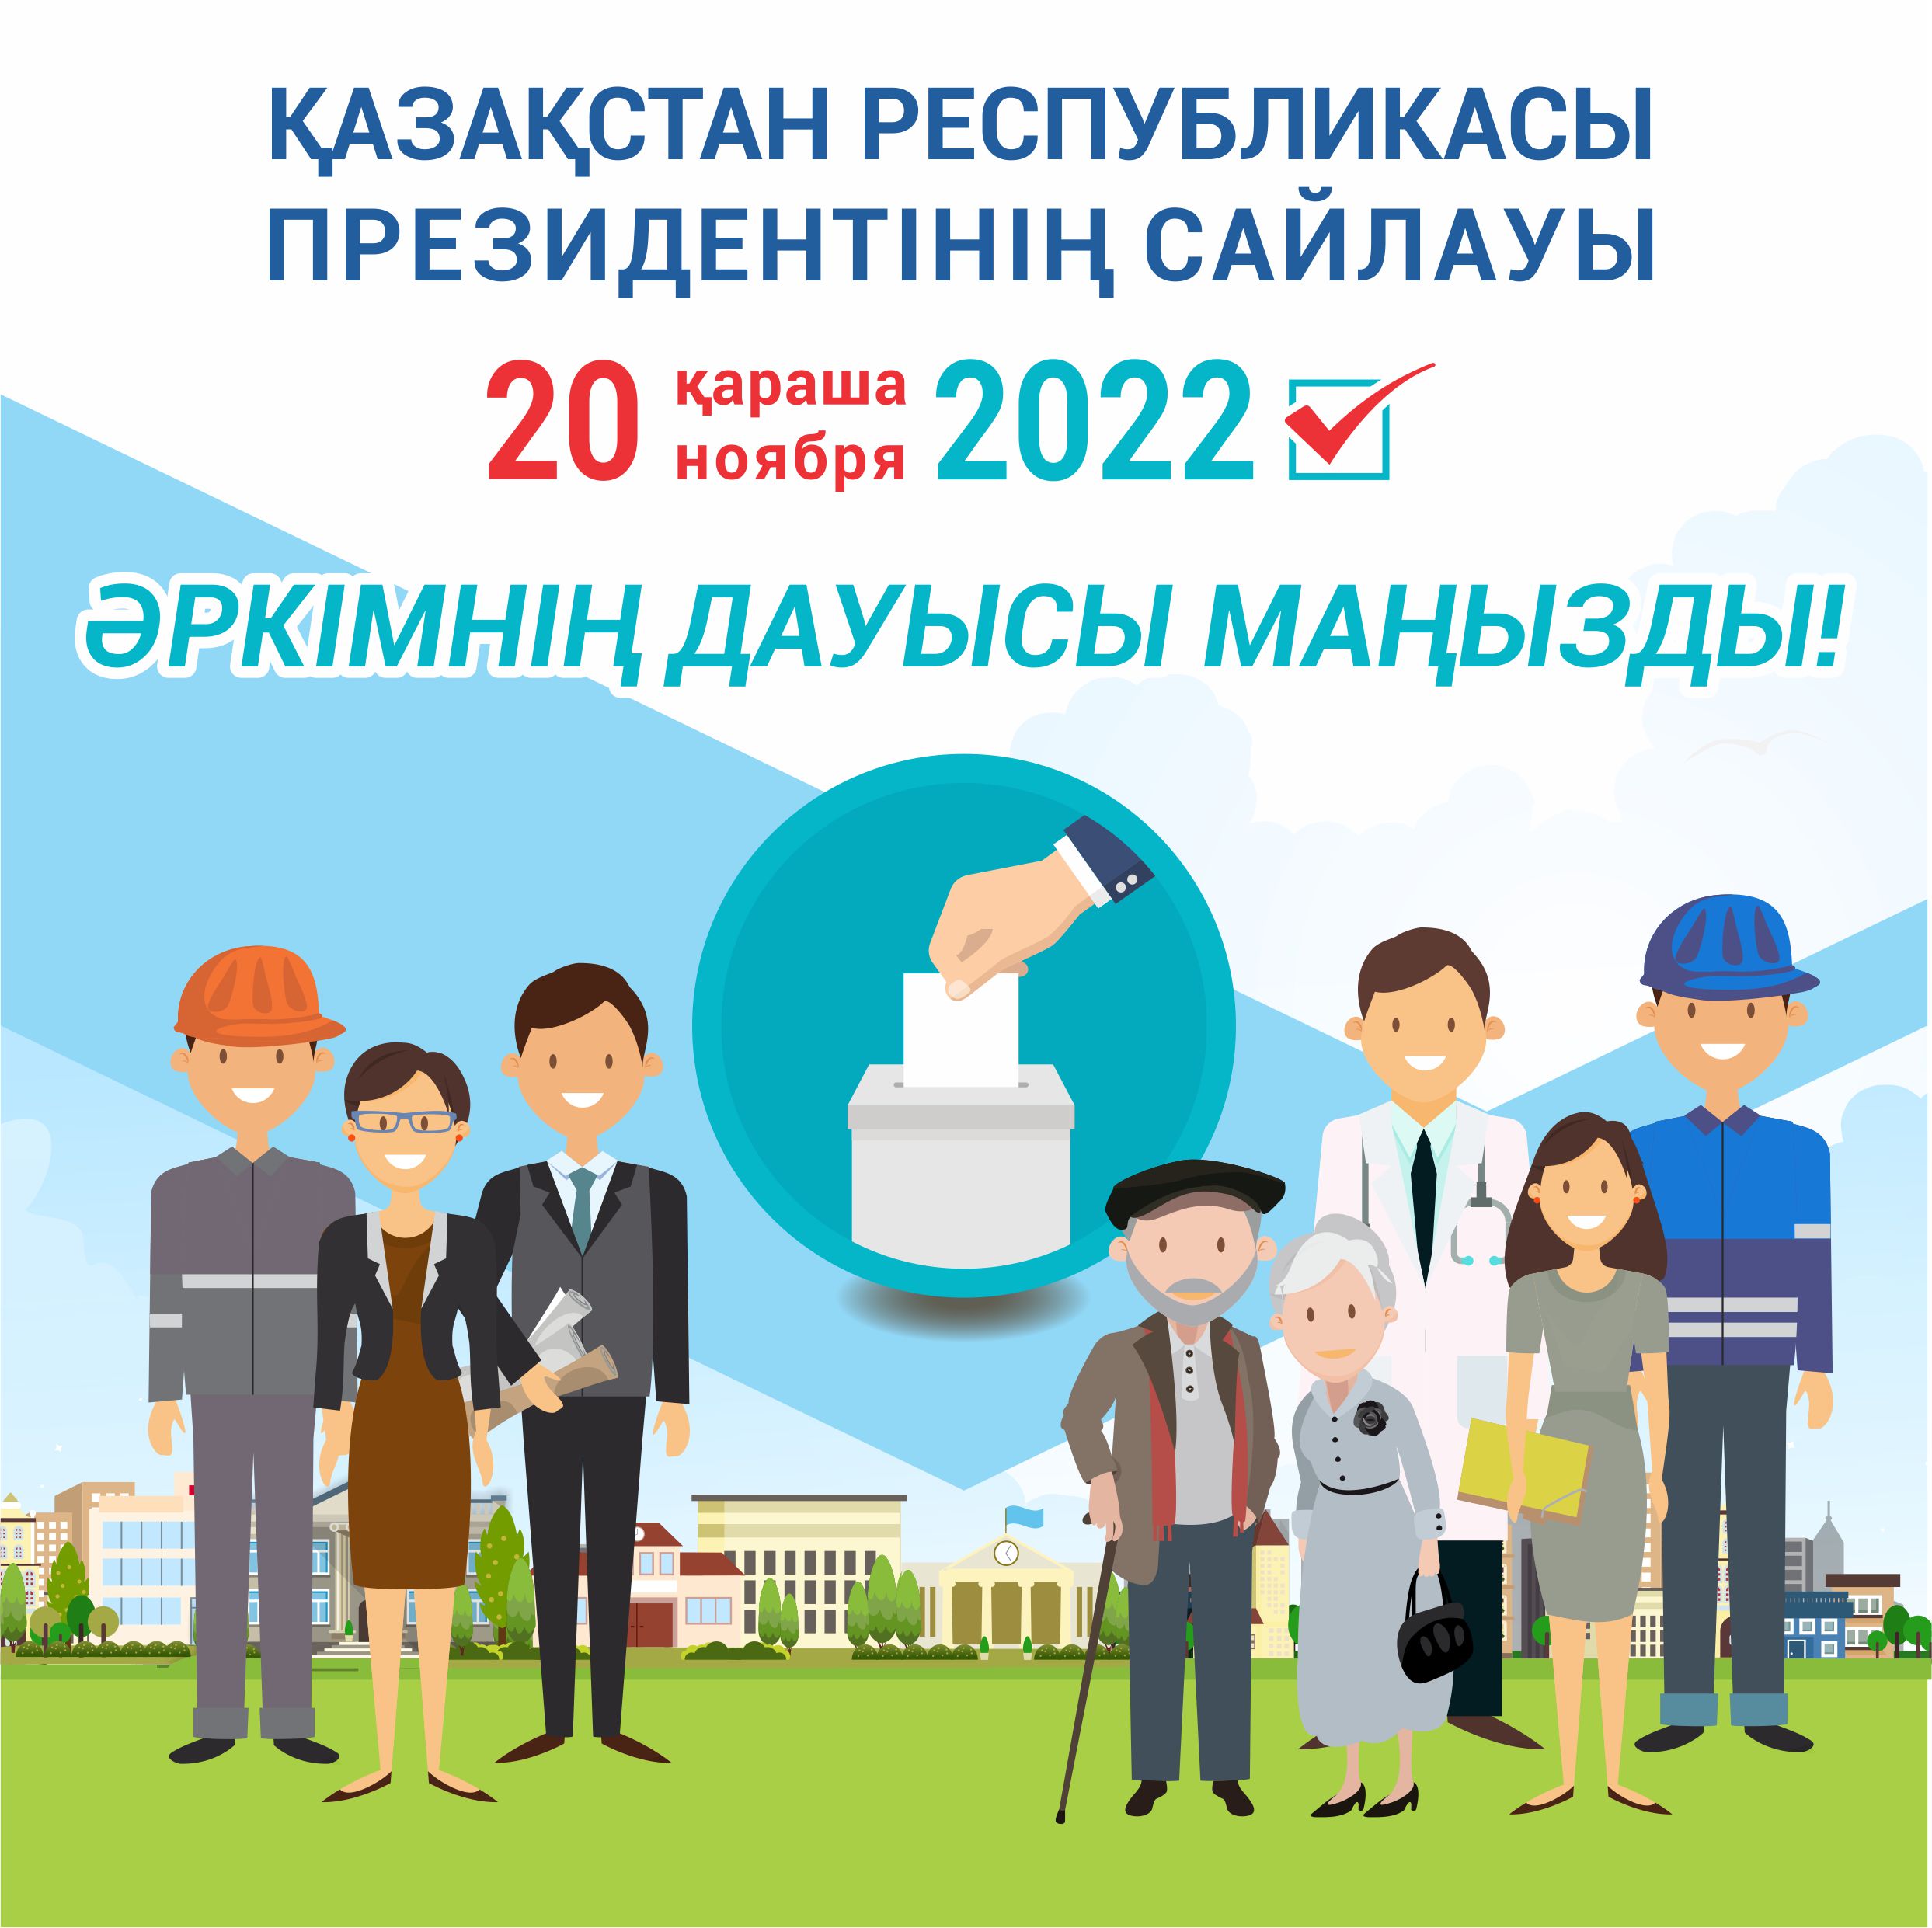 November 20, 2022 - Presidential Elections of the Republic of Kazakhstan